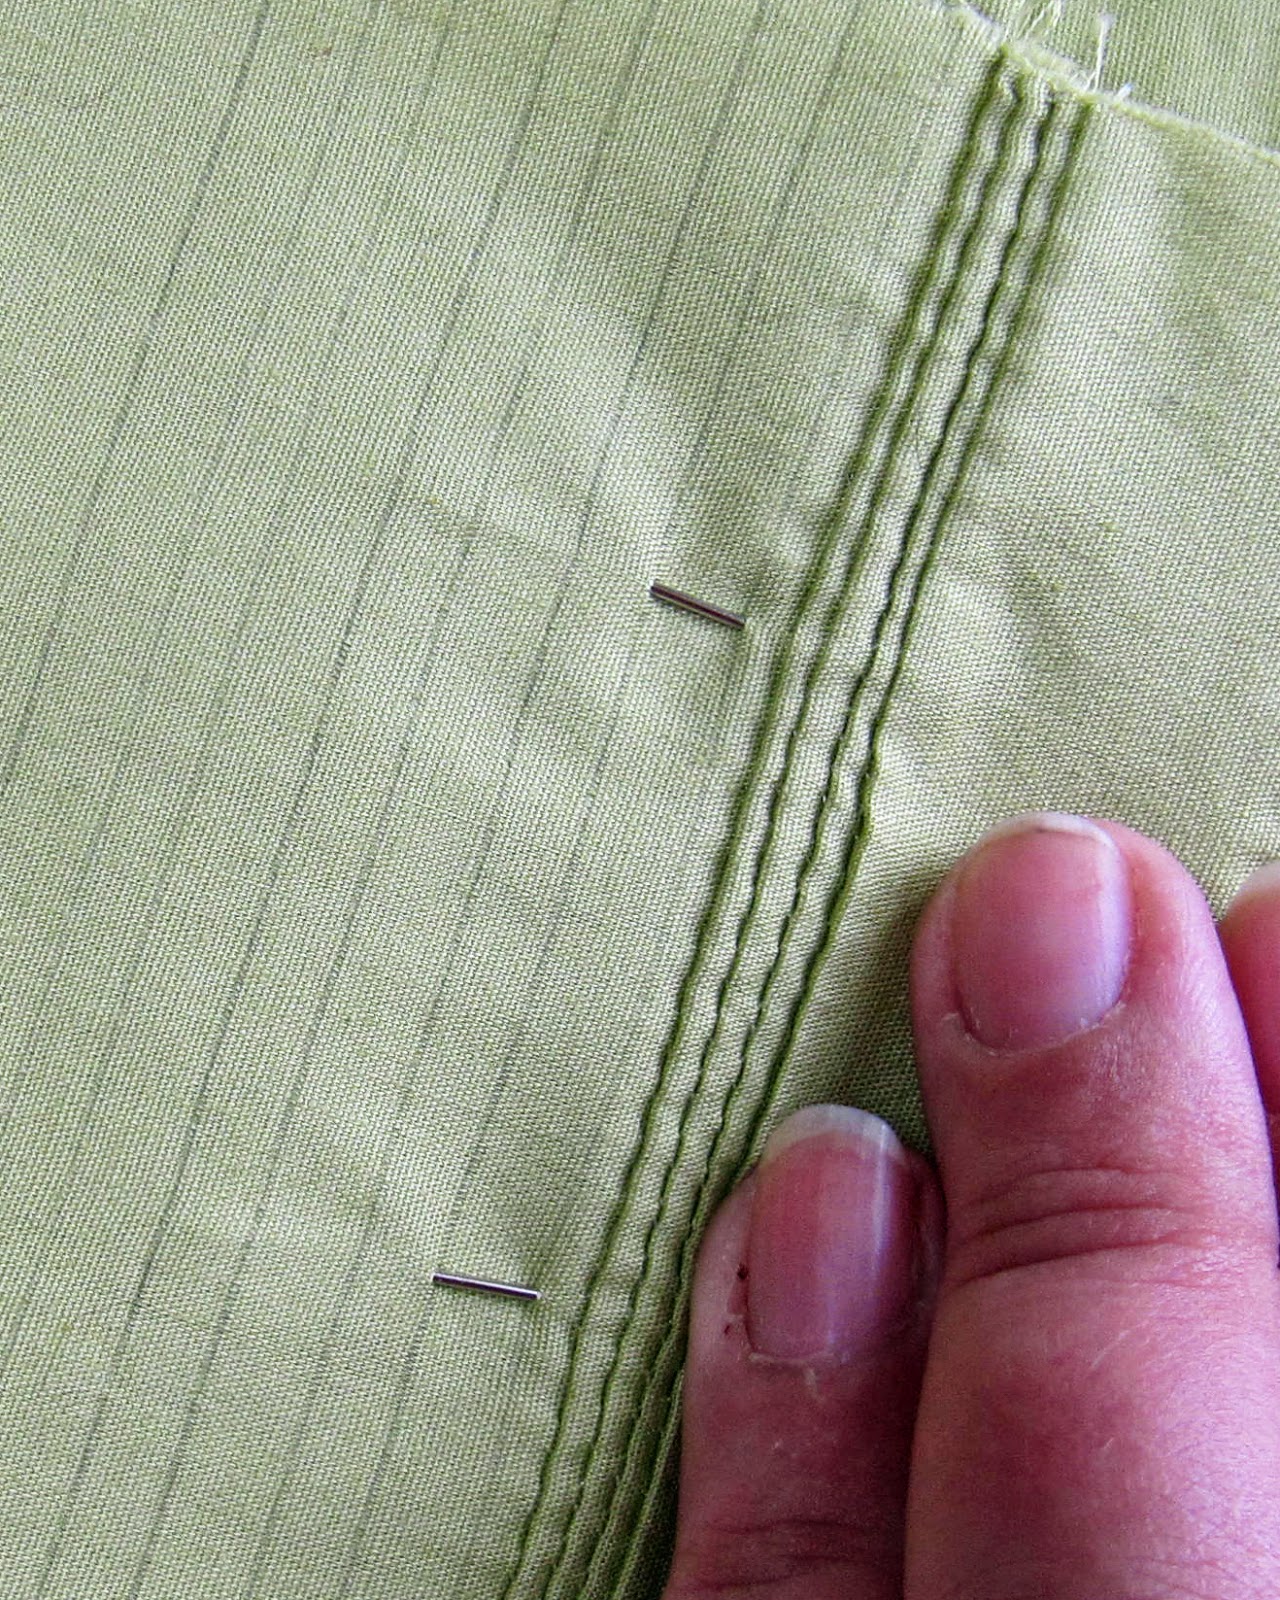 Natasha Morgan Art Dolls: How To: Sew Pin Tucks For Madeline